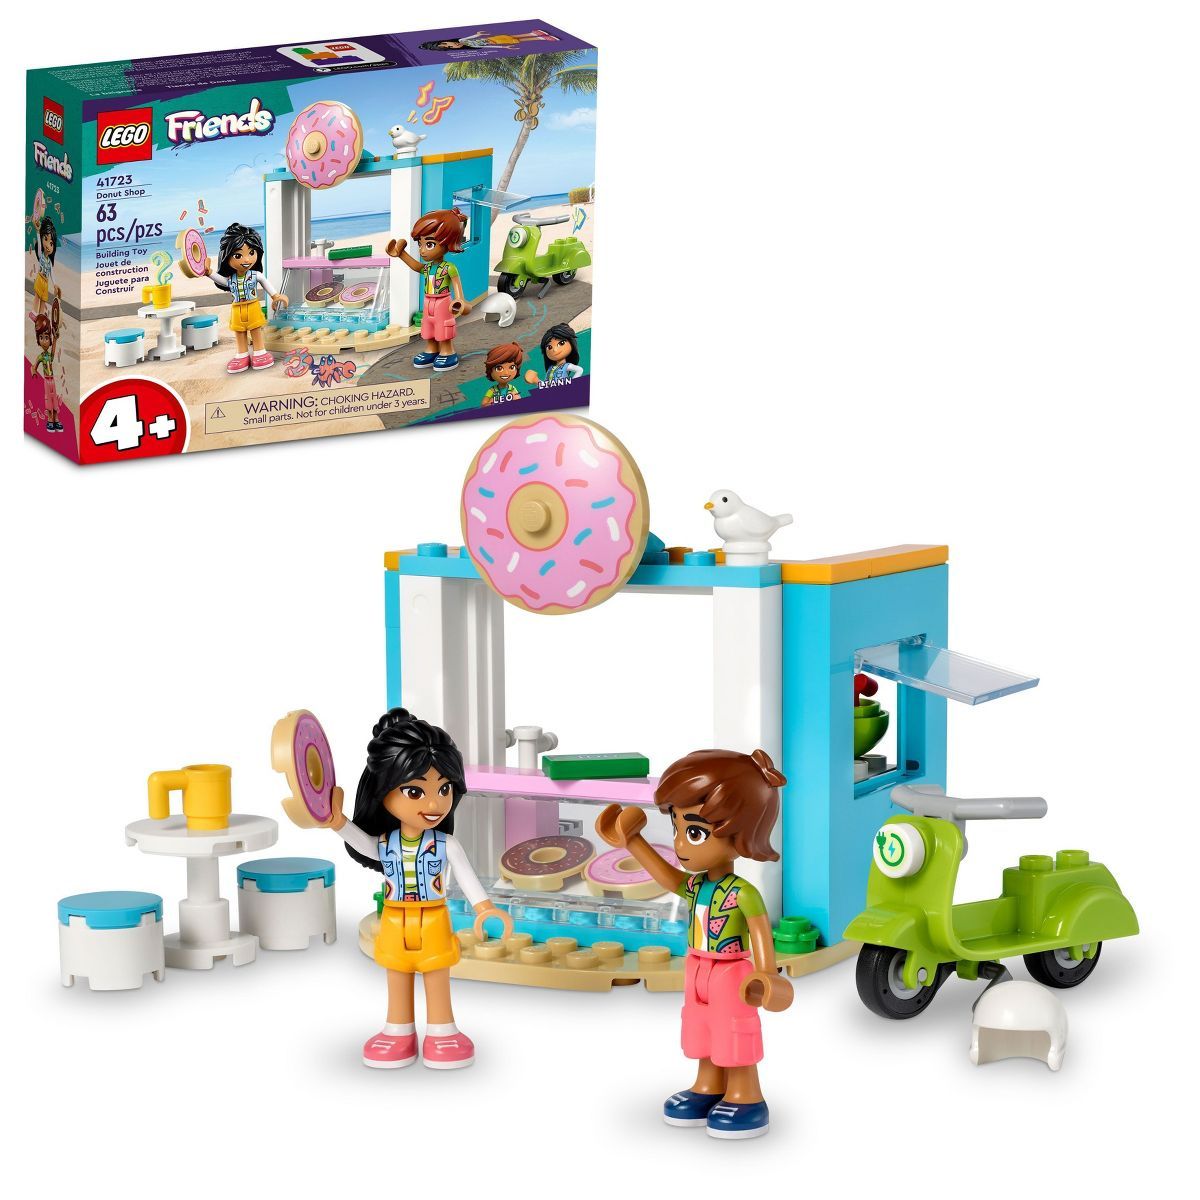 LEGO Friends 4+ Doughnut Shop Toy Cafe Playset 41723 | Target